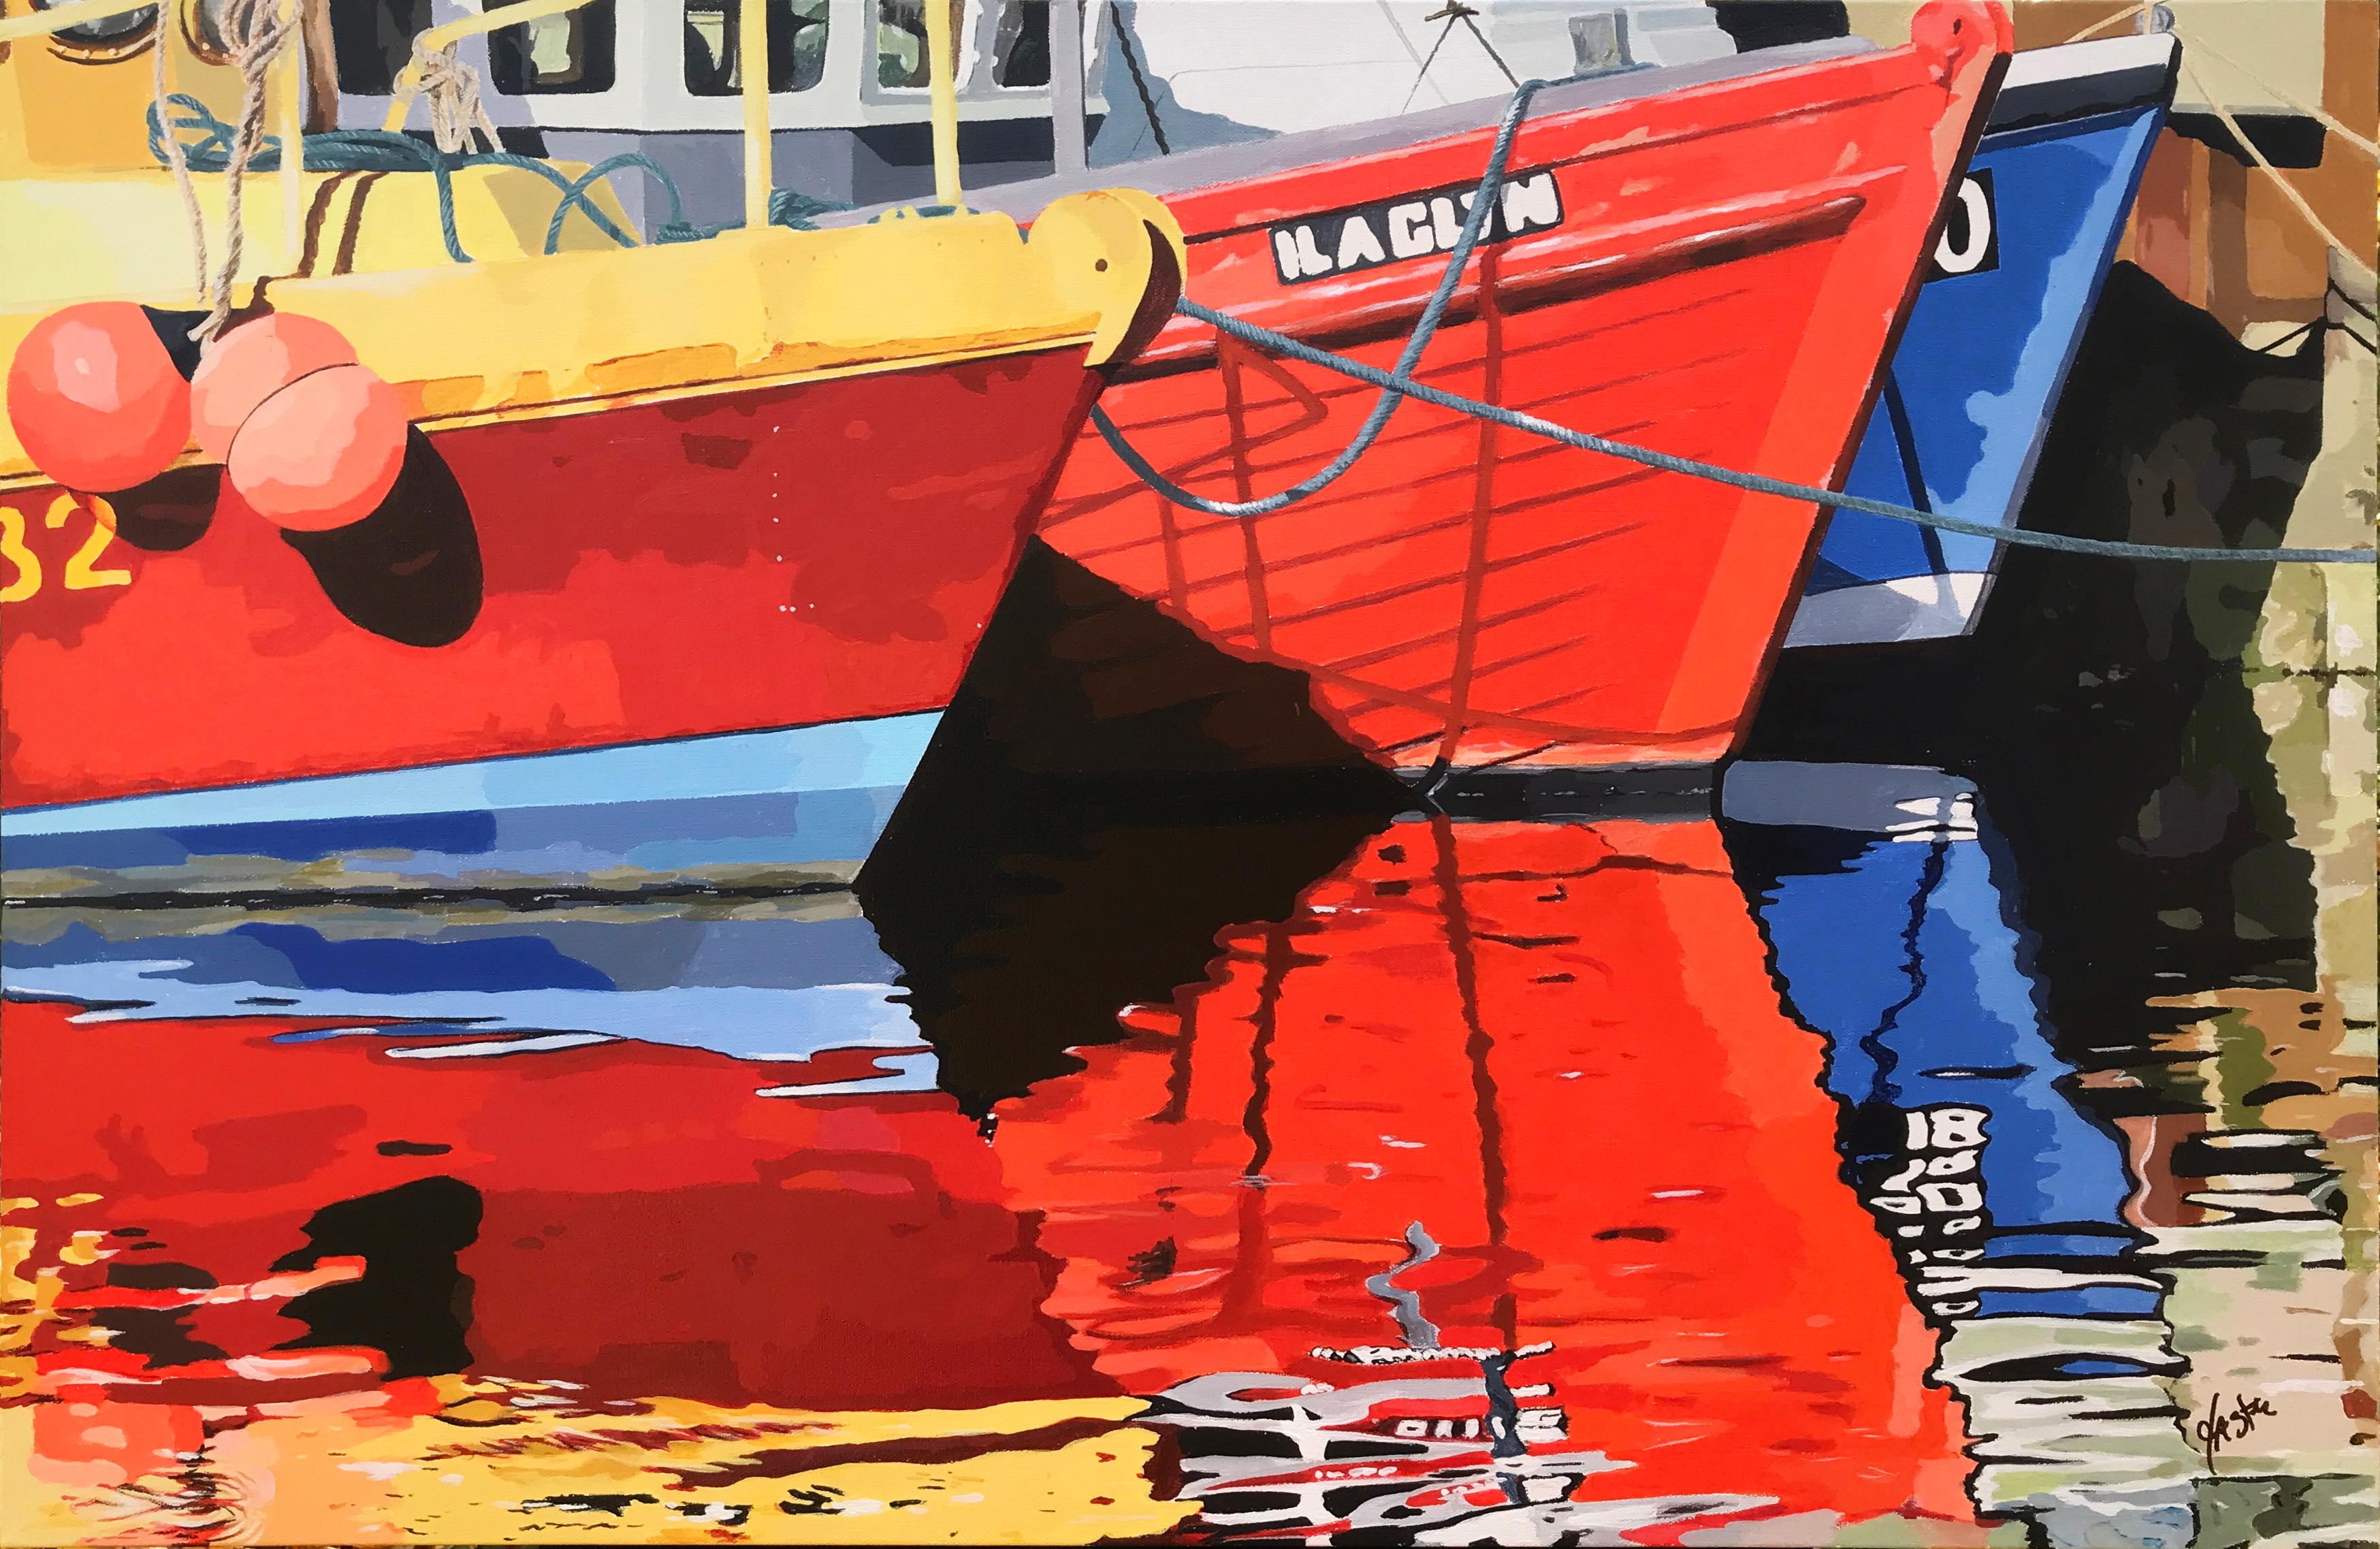 Boat Reflections, Original Painting - Art by John Jaster